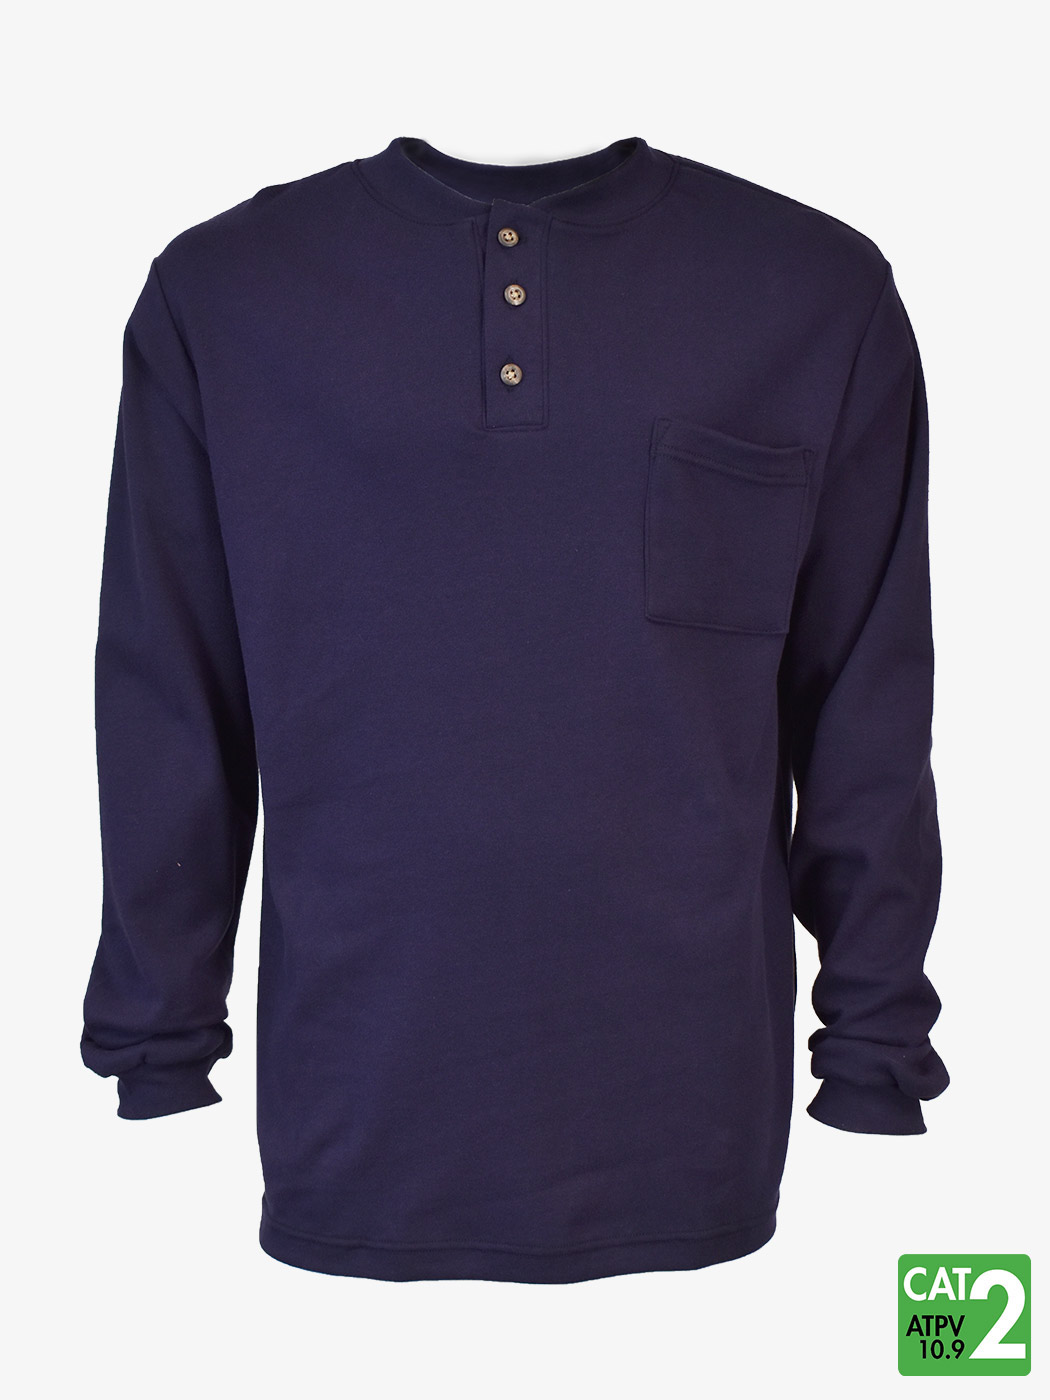 Ultrasoft® 6 oz Henley FR long sleeve shirt